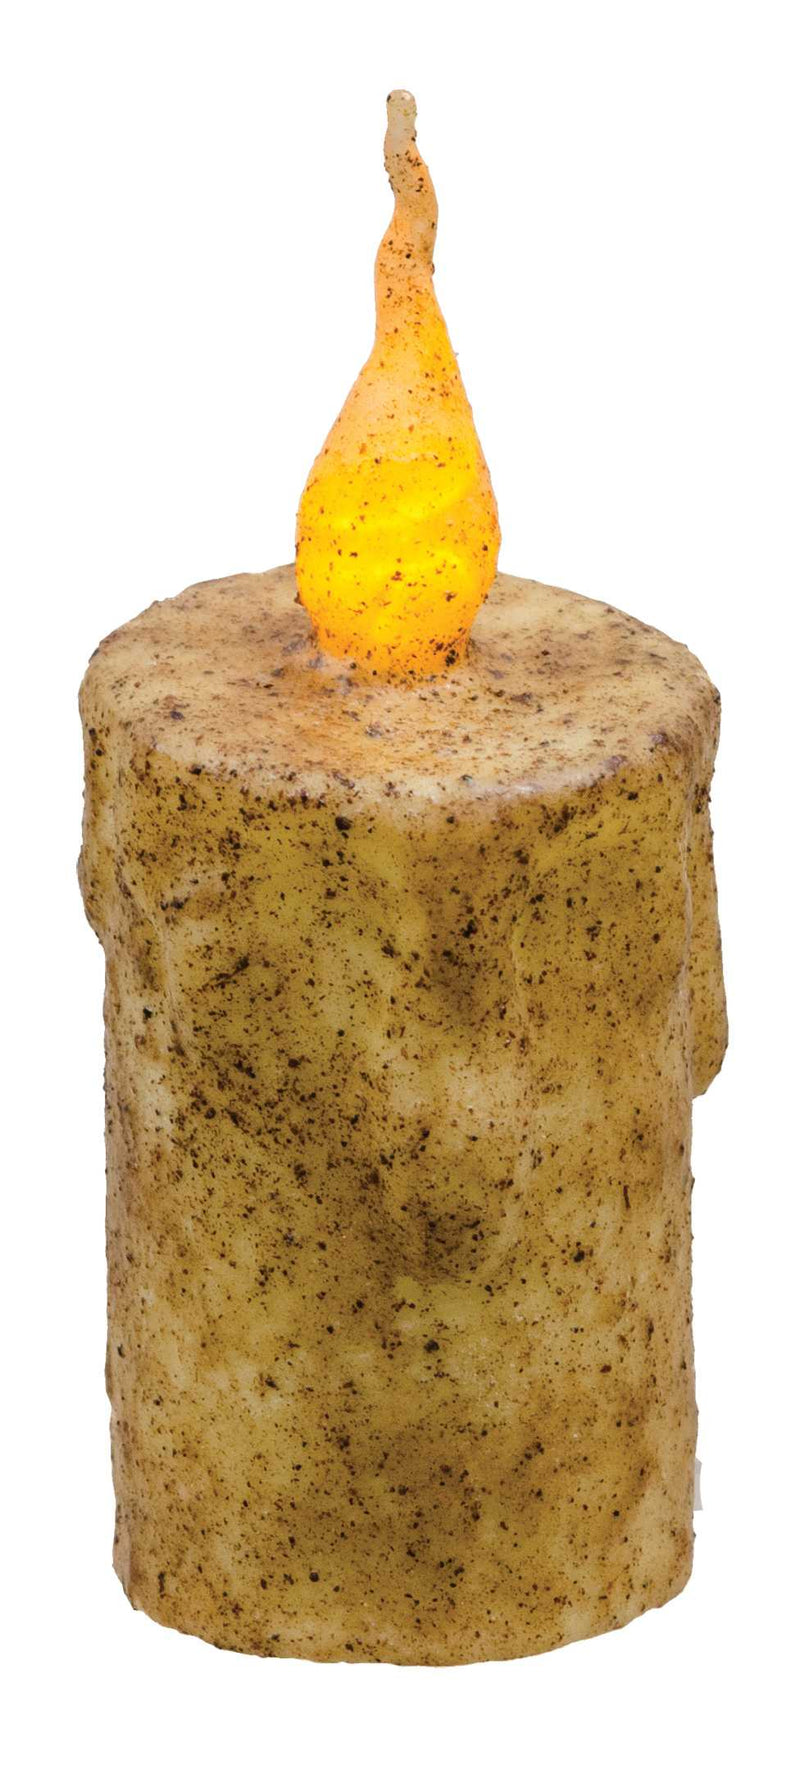 Twisted Flame Pillar - Burnt Ivory - 5"